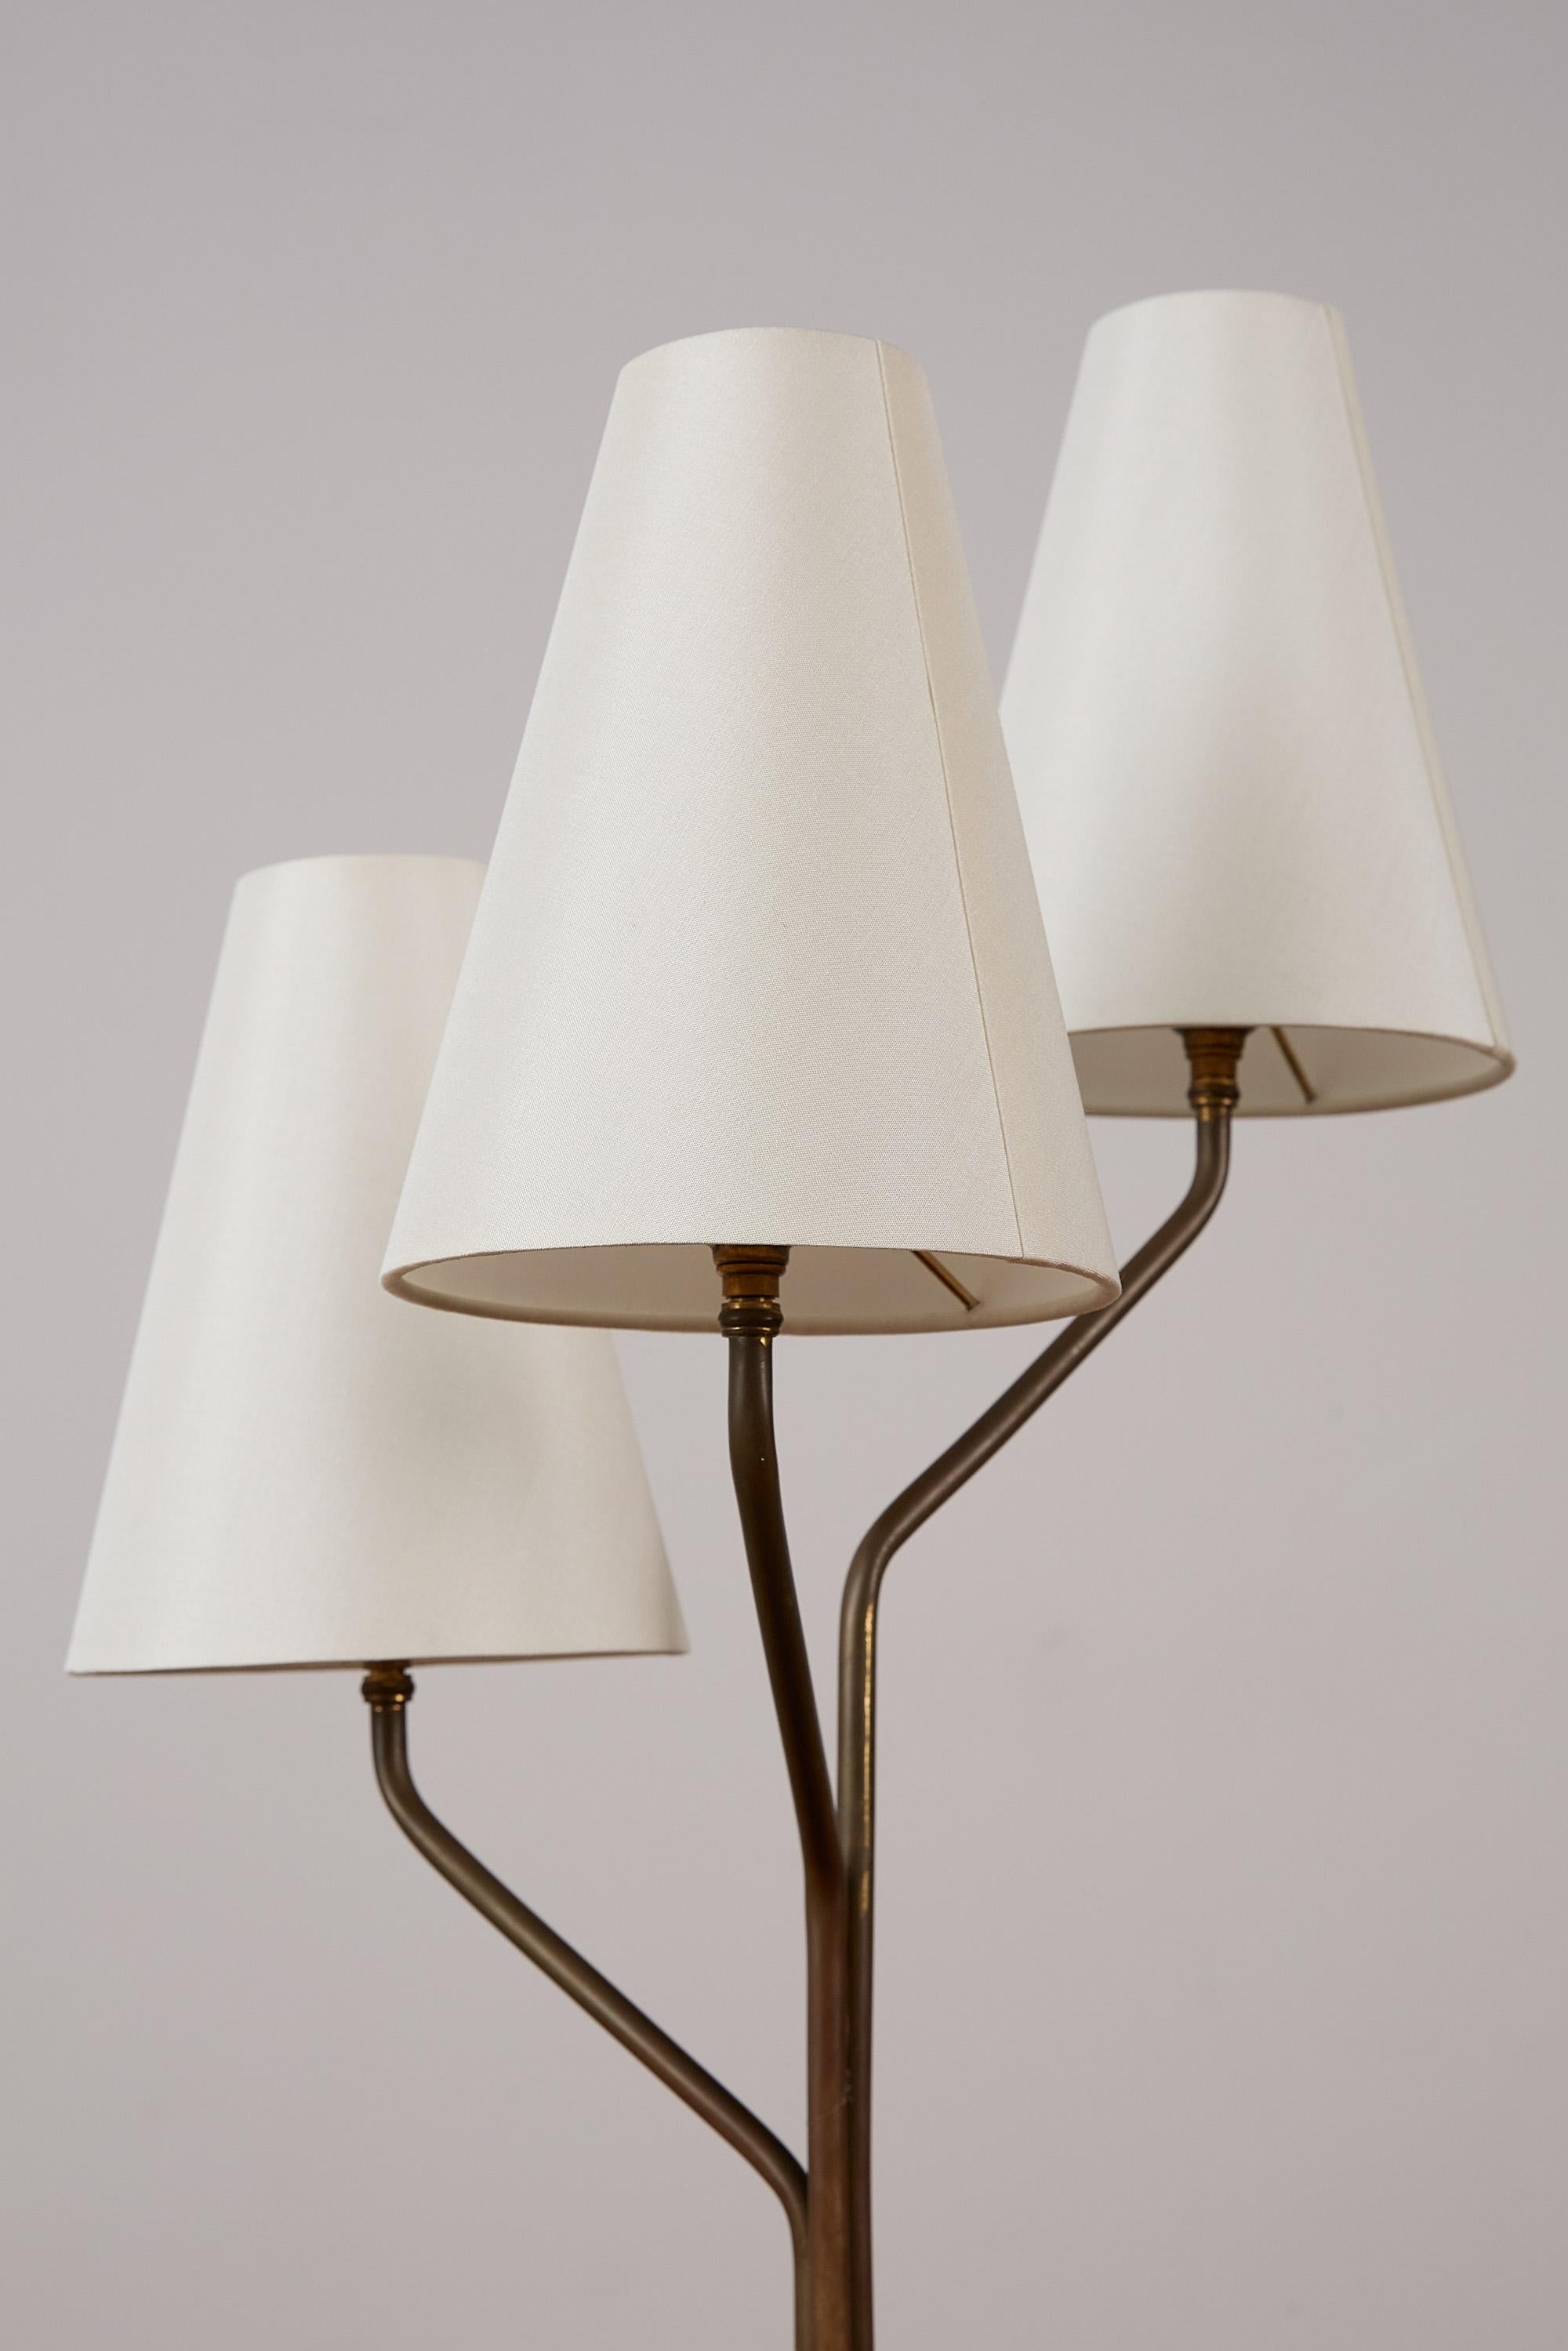 Silk Jean Royère Style Tri-Shade Table Lamp